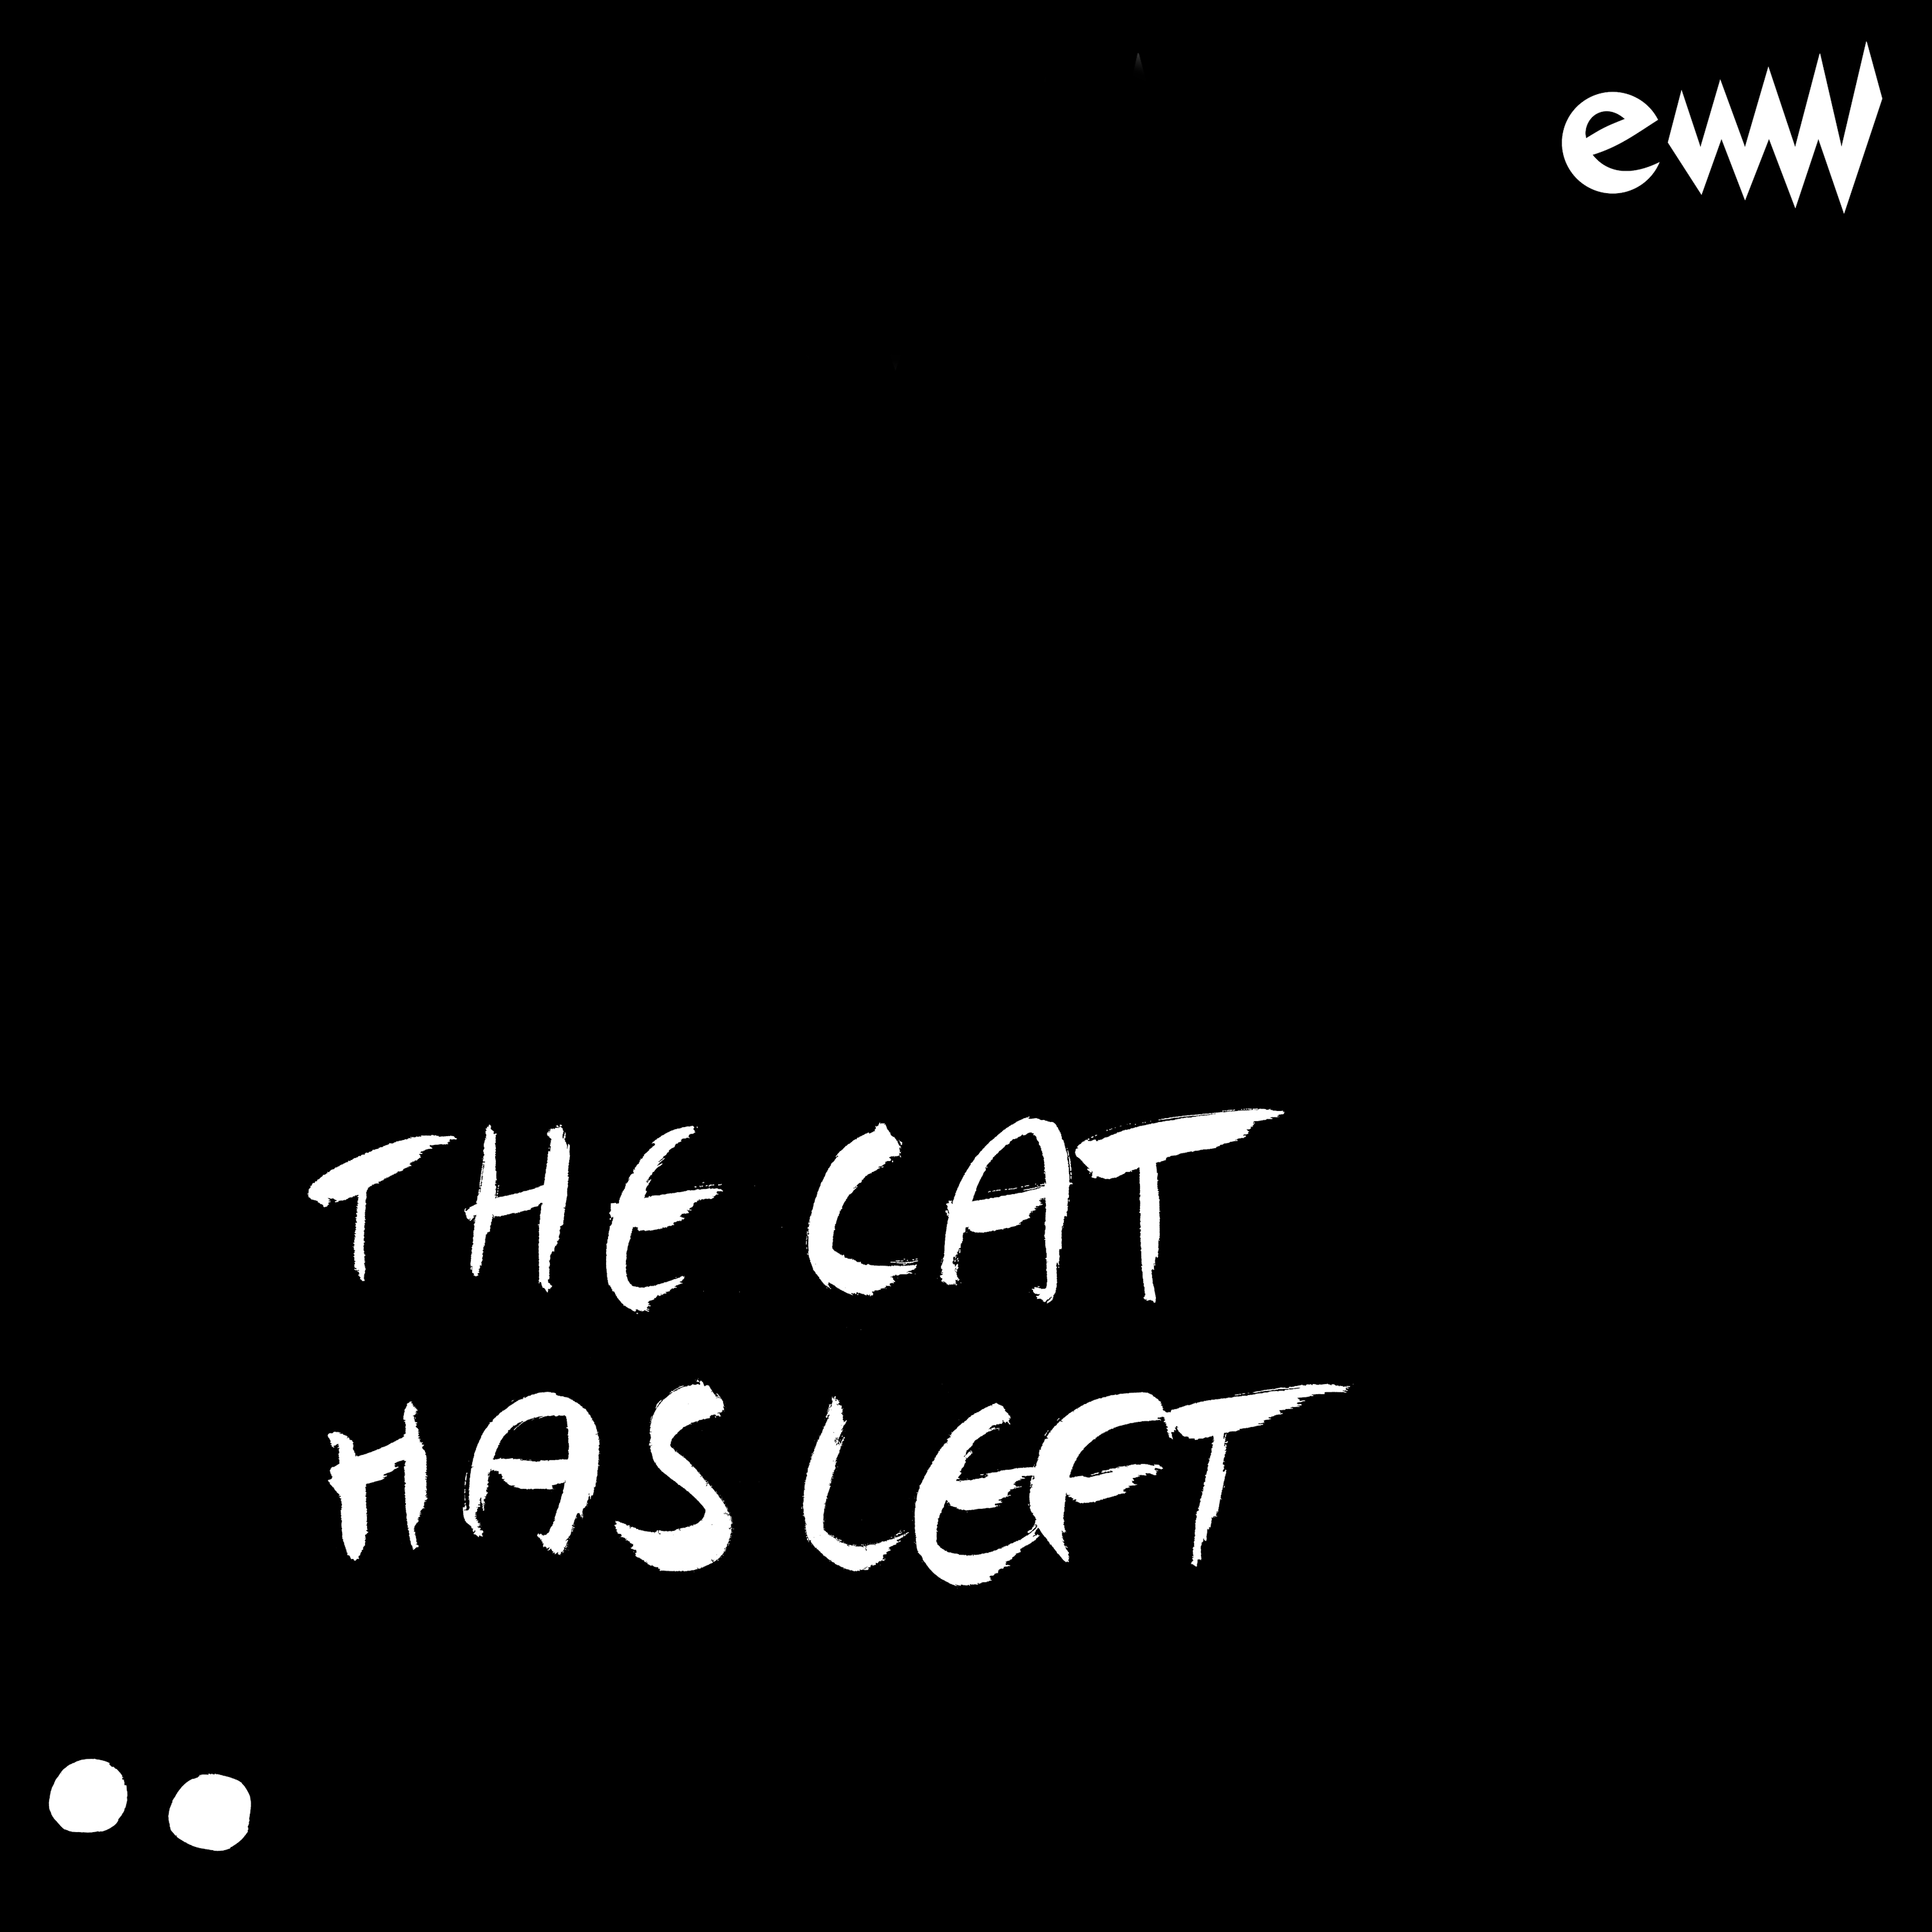 eww – The Cat Has Left